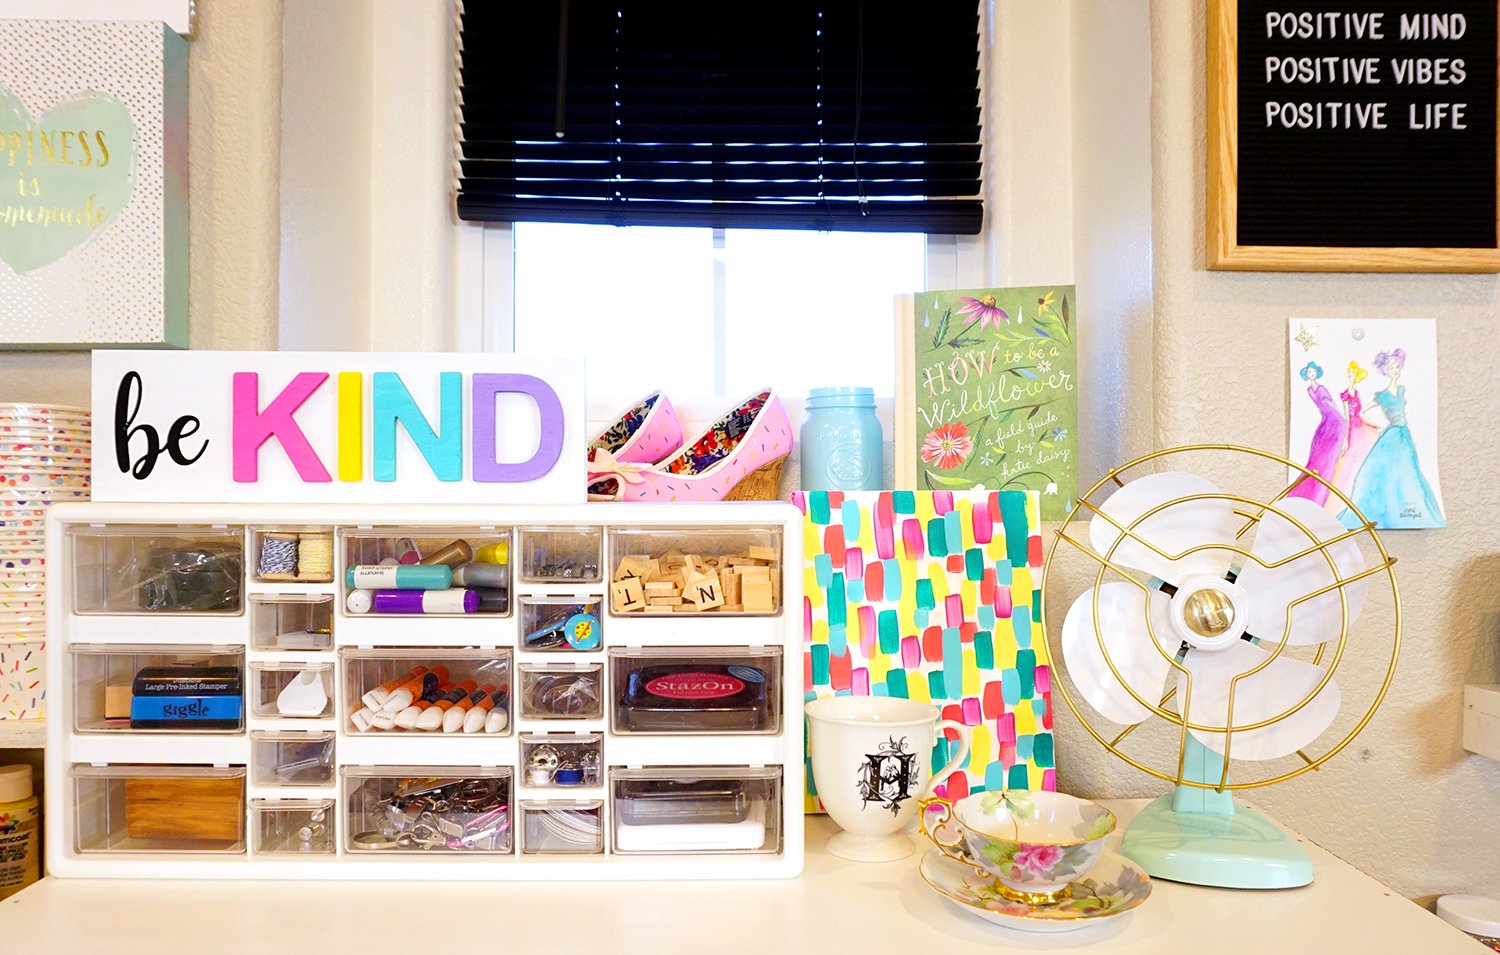 be kind sign and storage shelf 